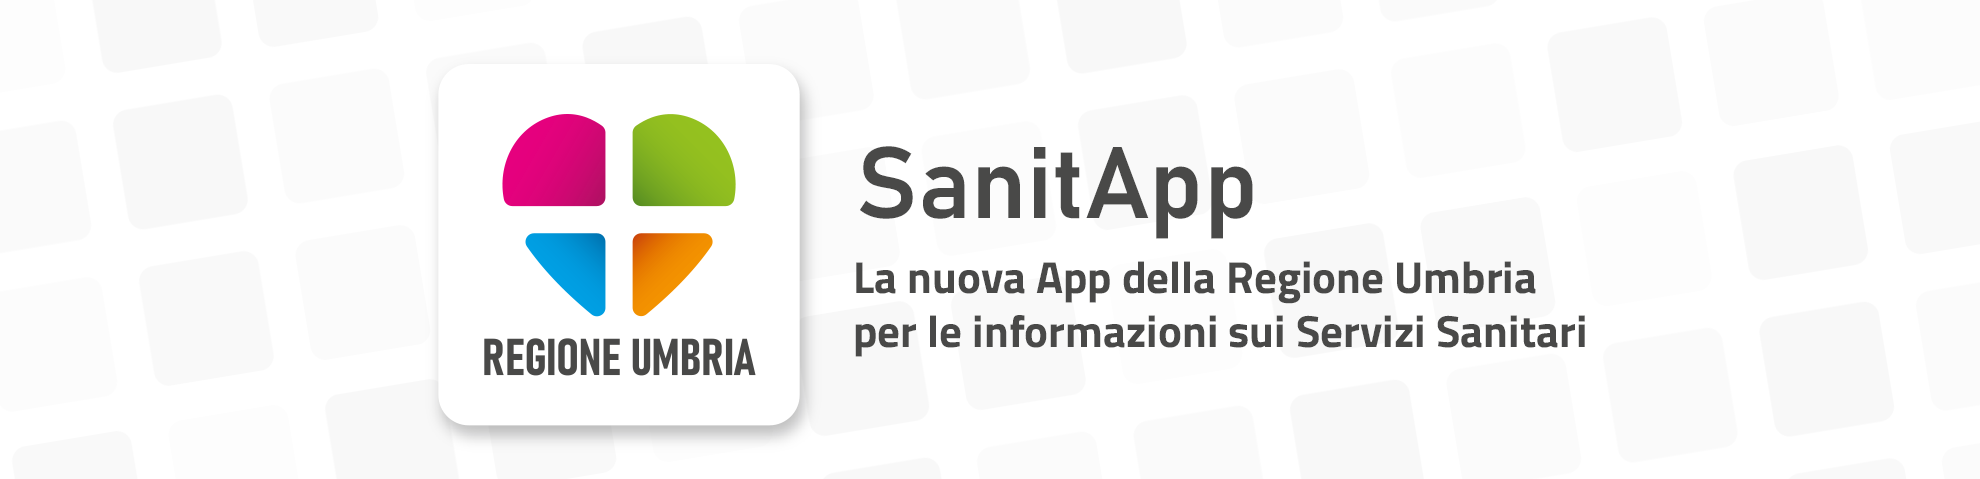 SanitApp info servizi sanitari